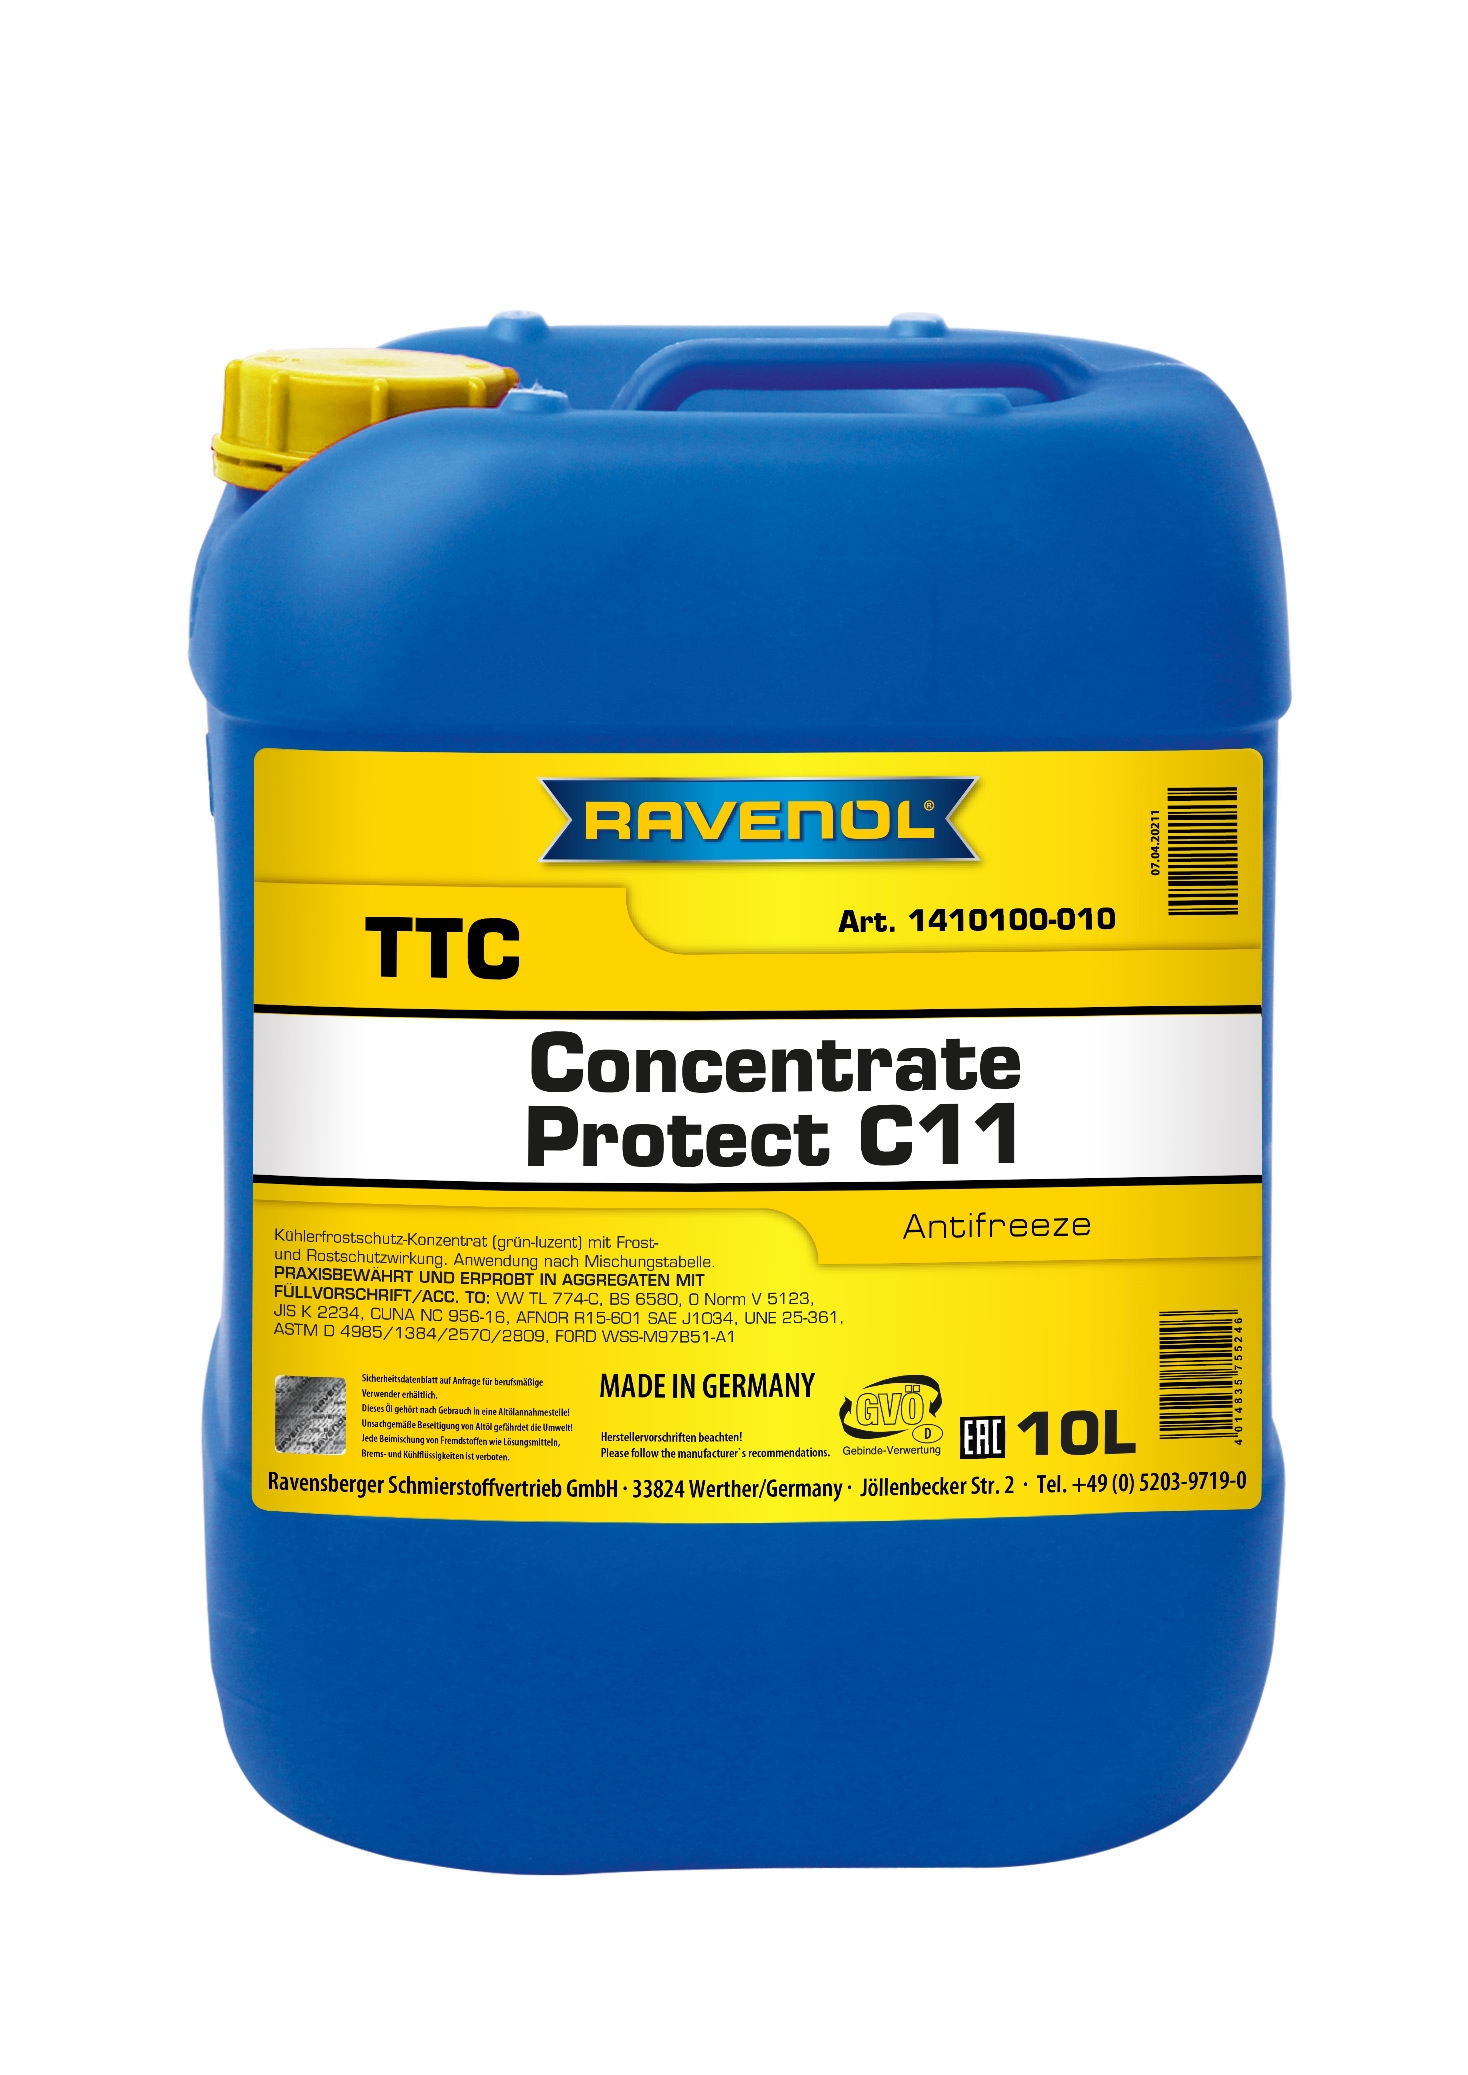 RAVENOL TTC Concentrate Protect C11